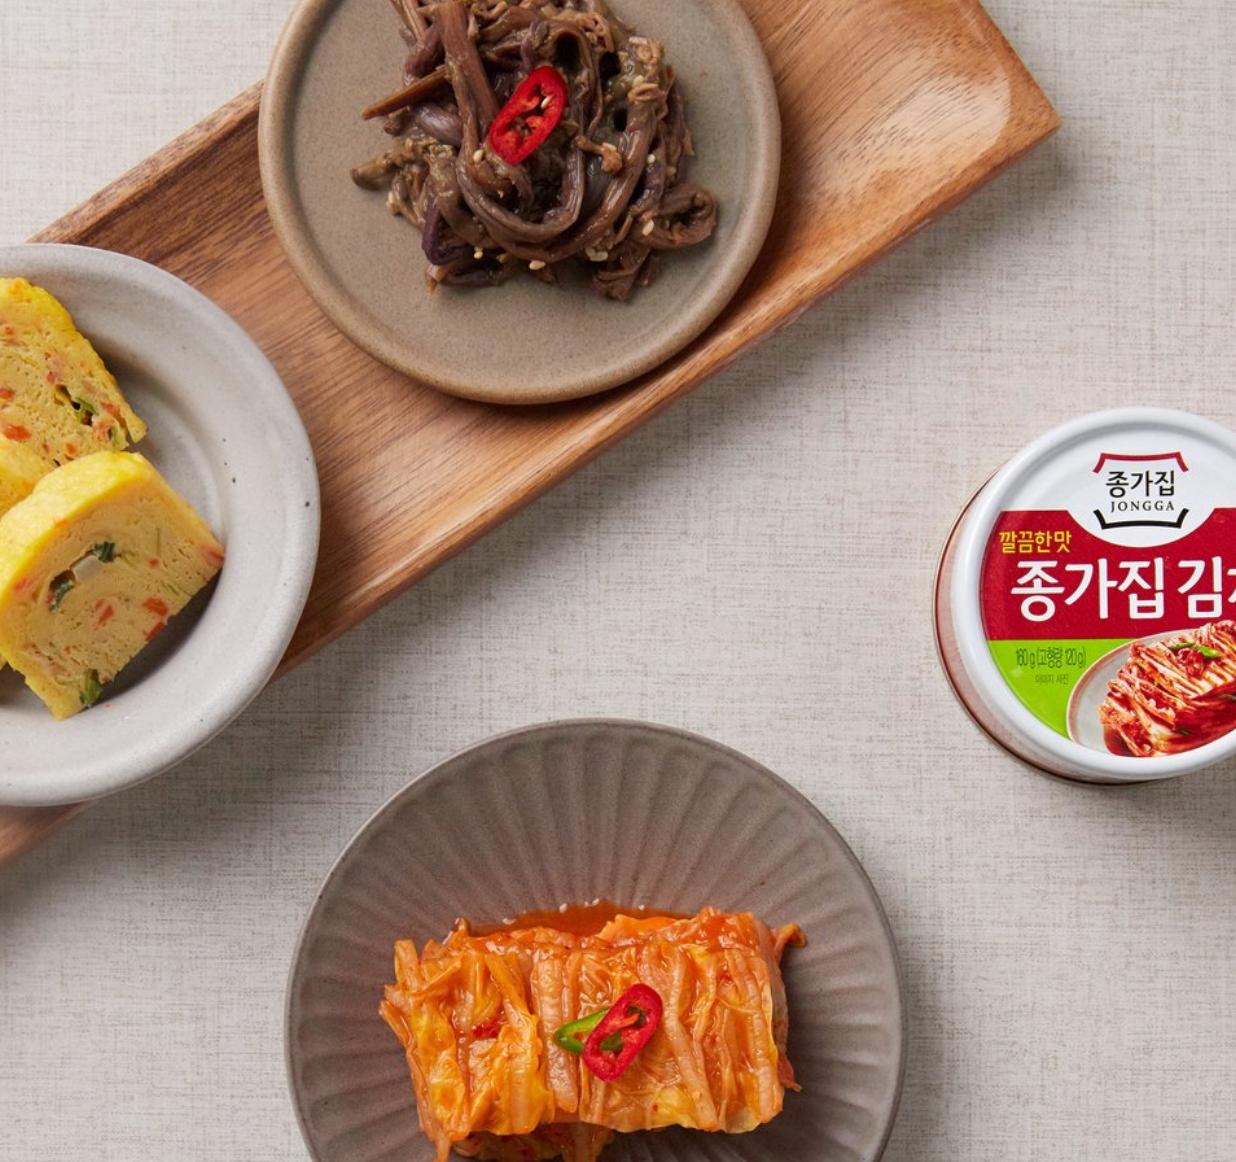 jongga jib Korea Kimchi as a side dish